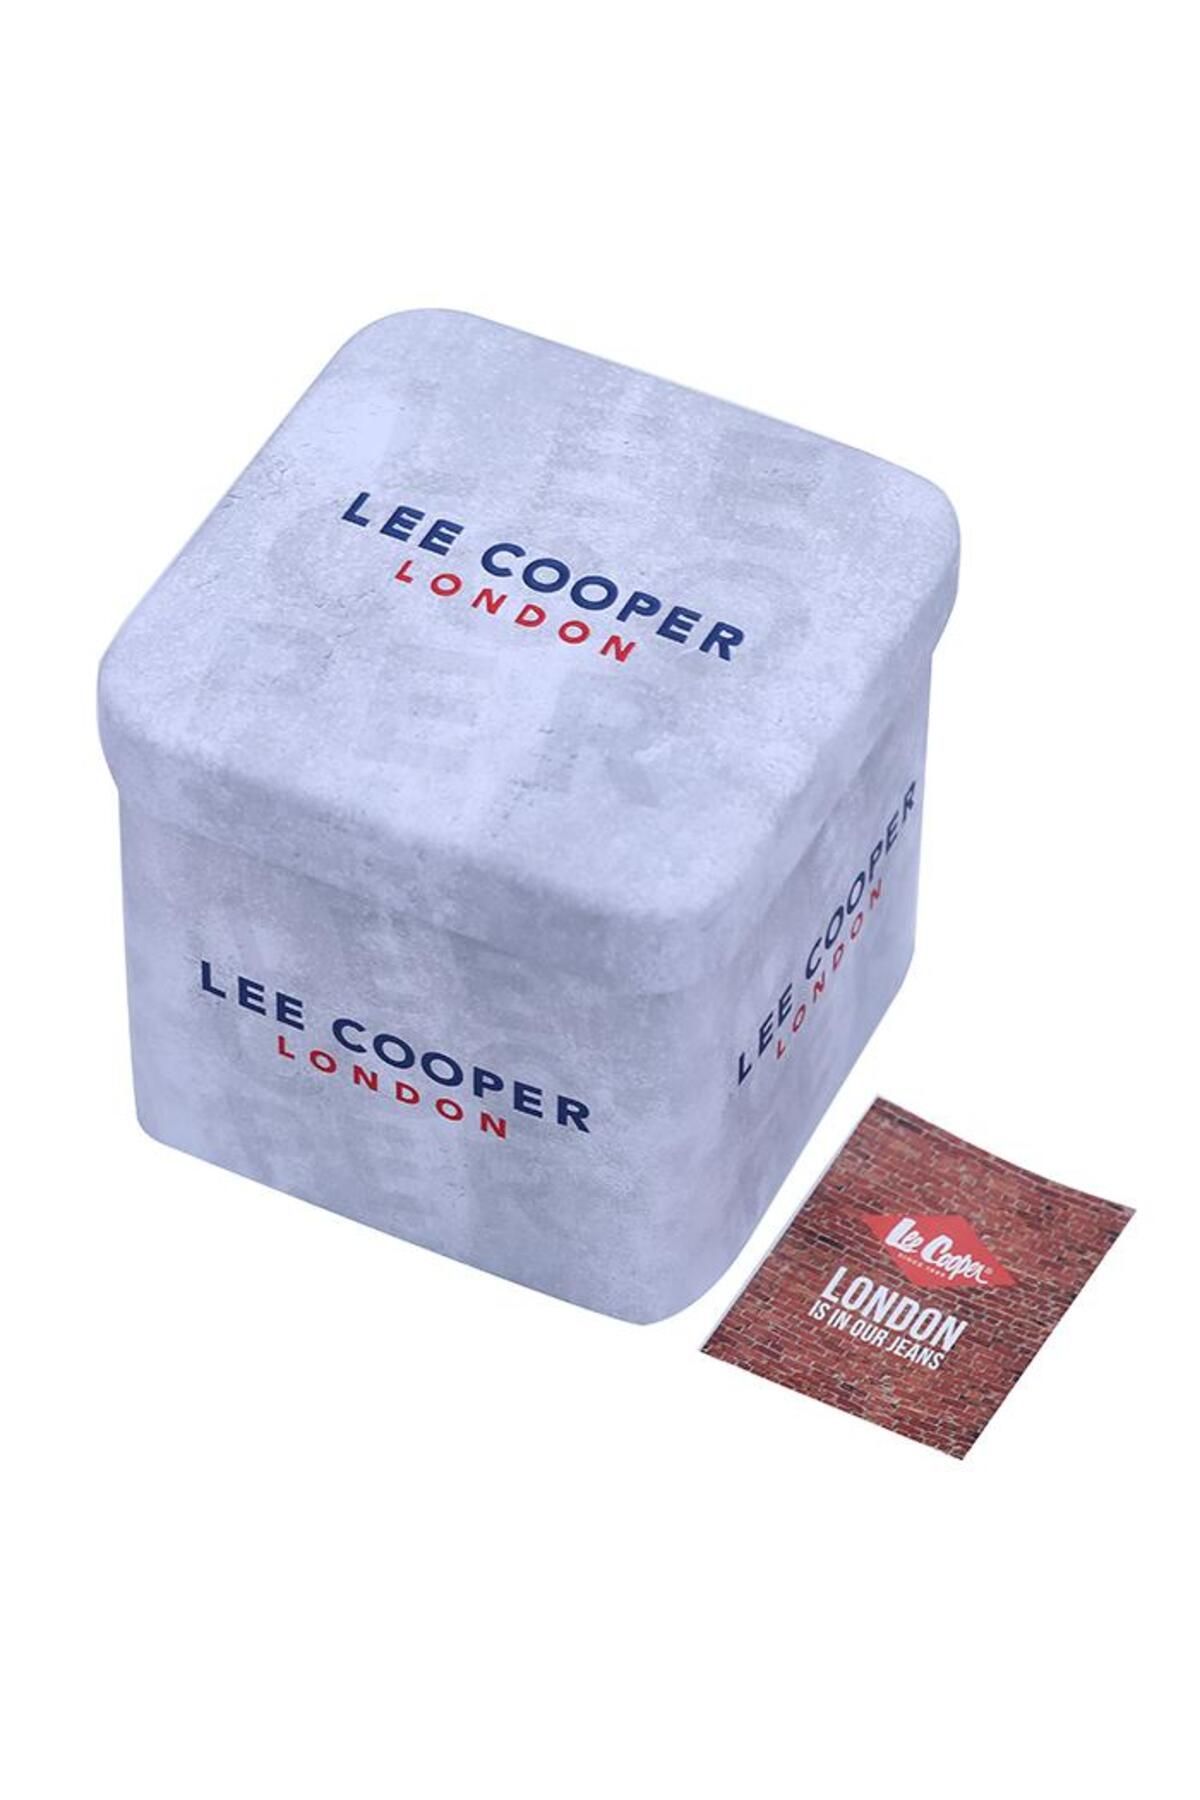 Lee Cooper ضد آب با عملکرد ساعت 5 دستگاه خودپرداز 2 سال ضمانت